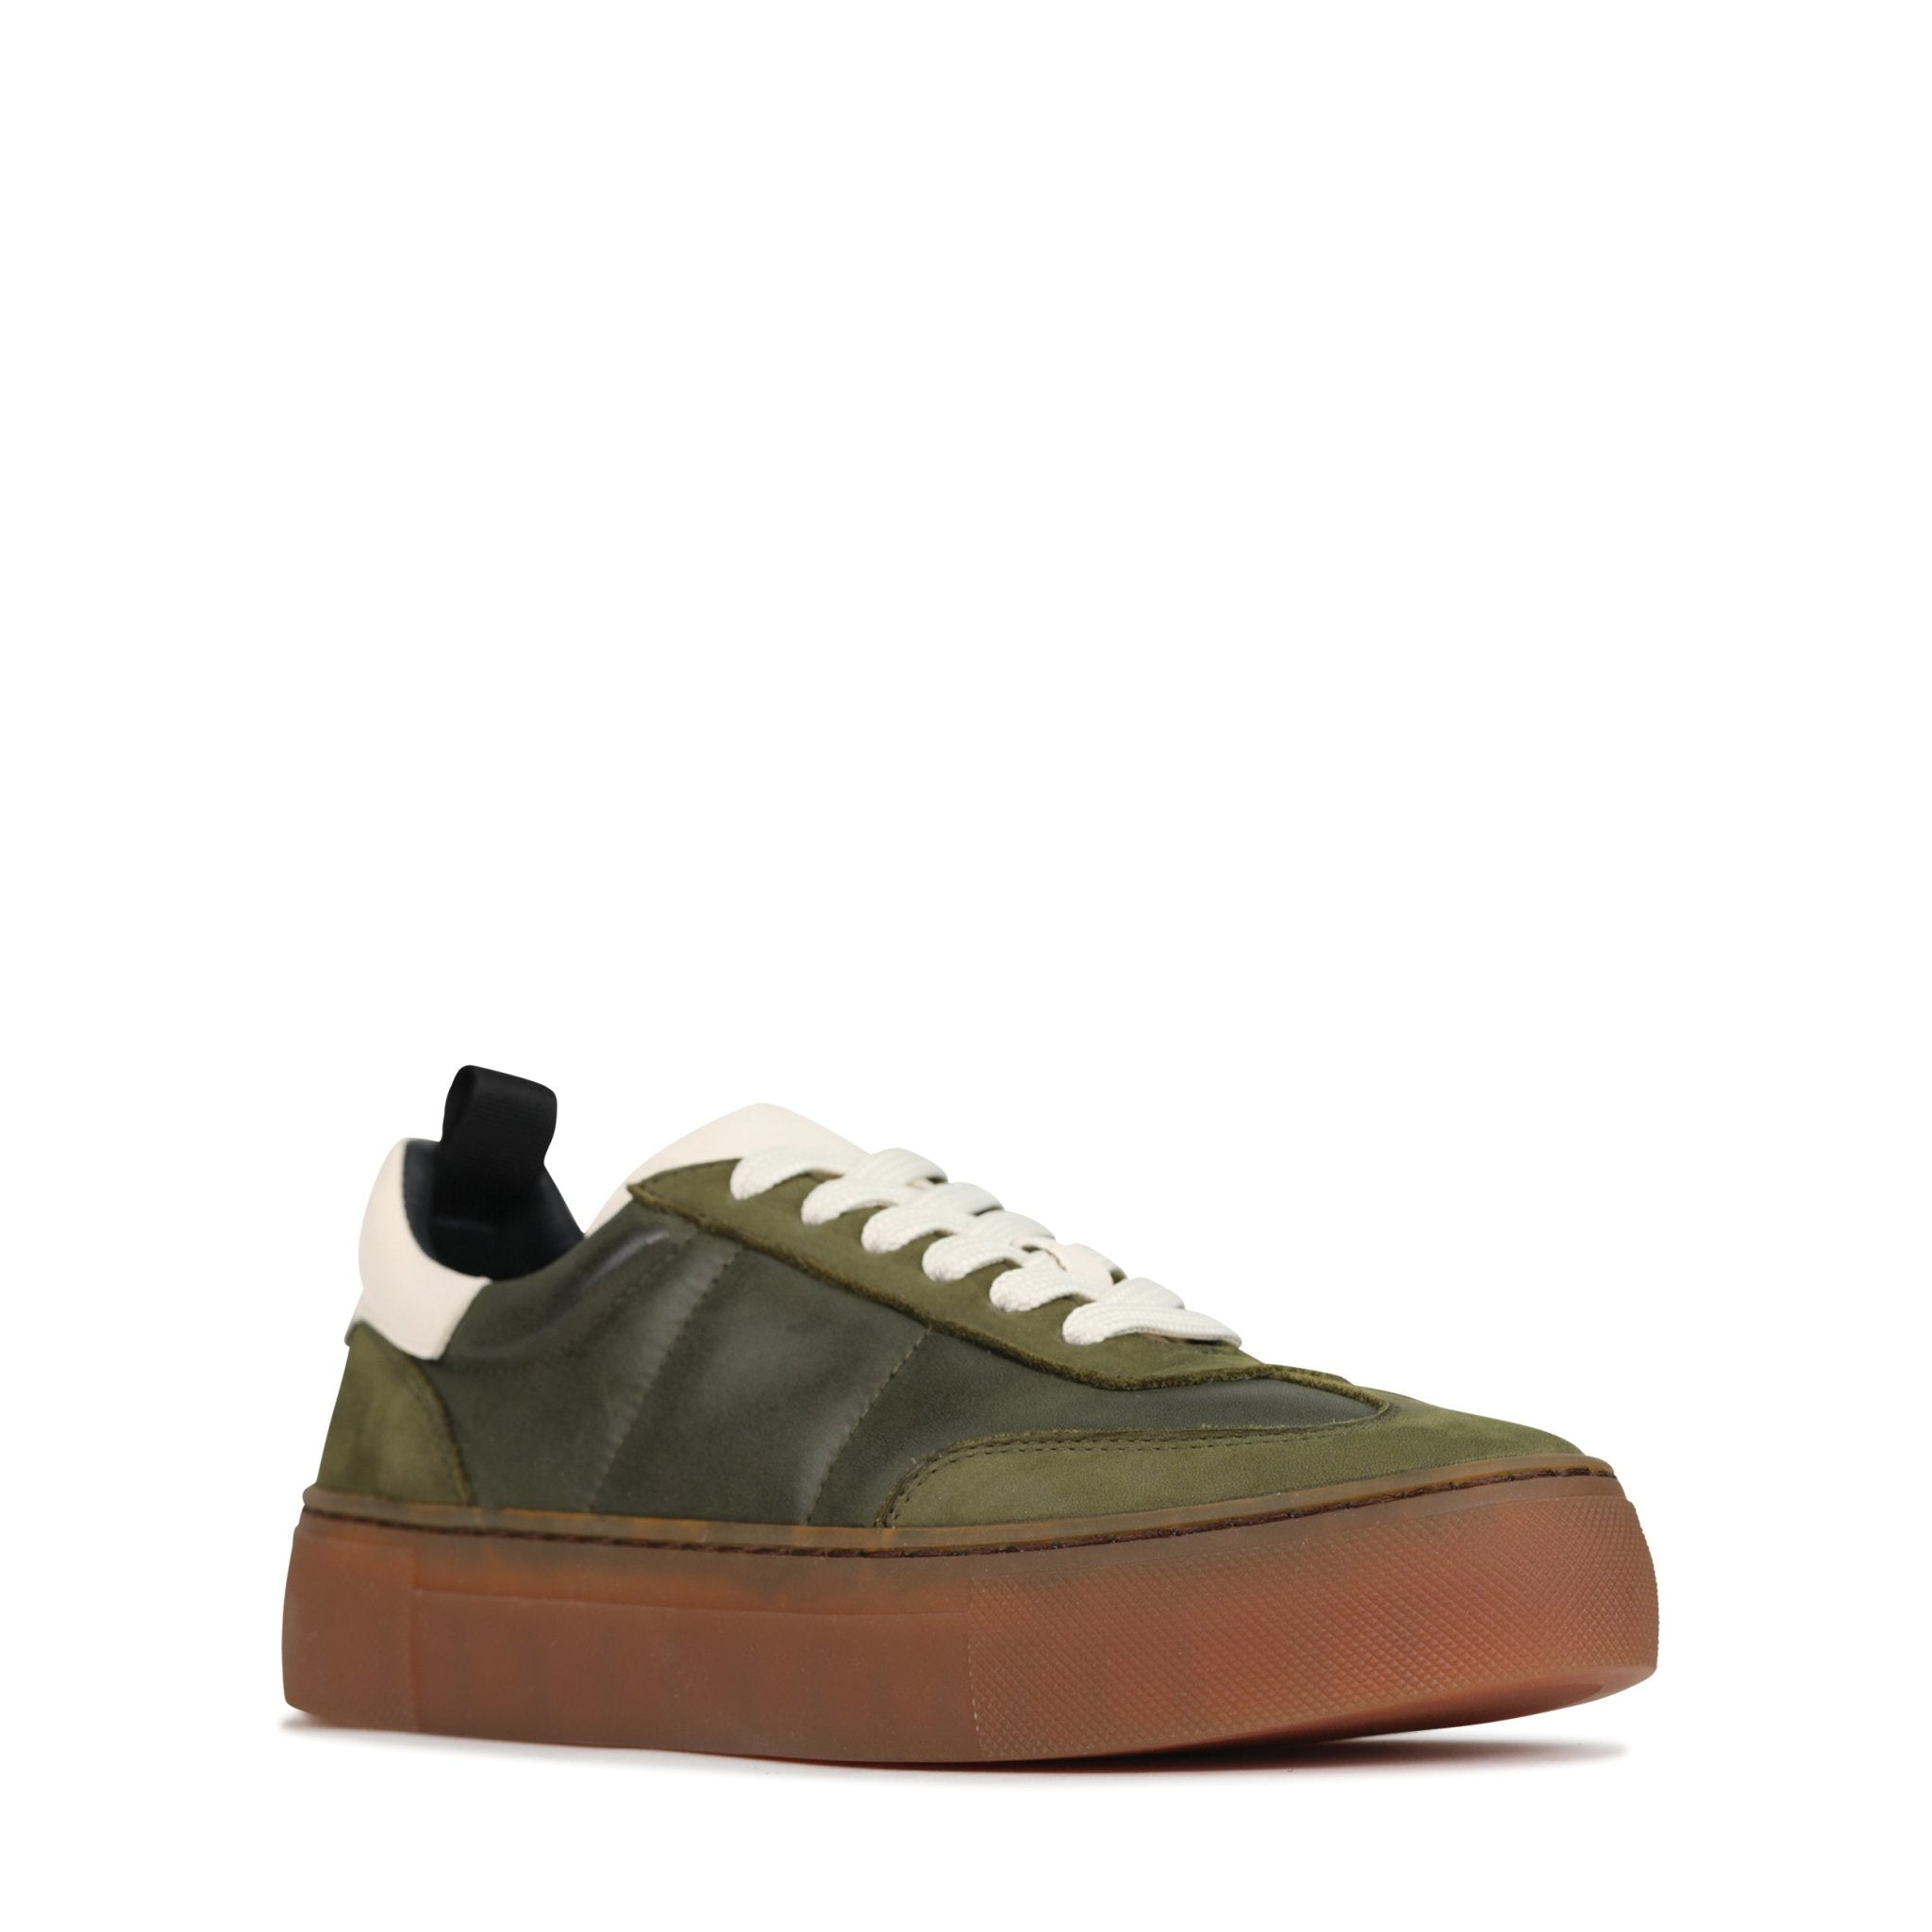 NATALI - EOS Footwear - #color_Dark/olive